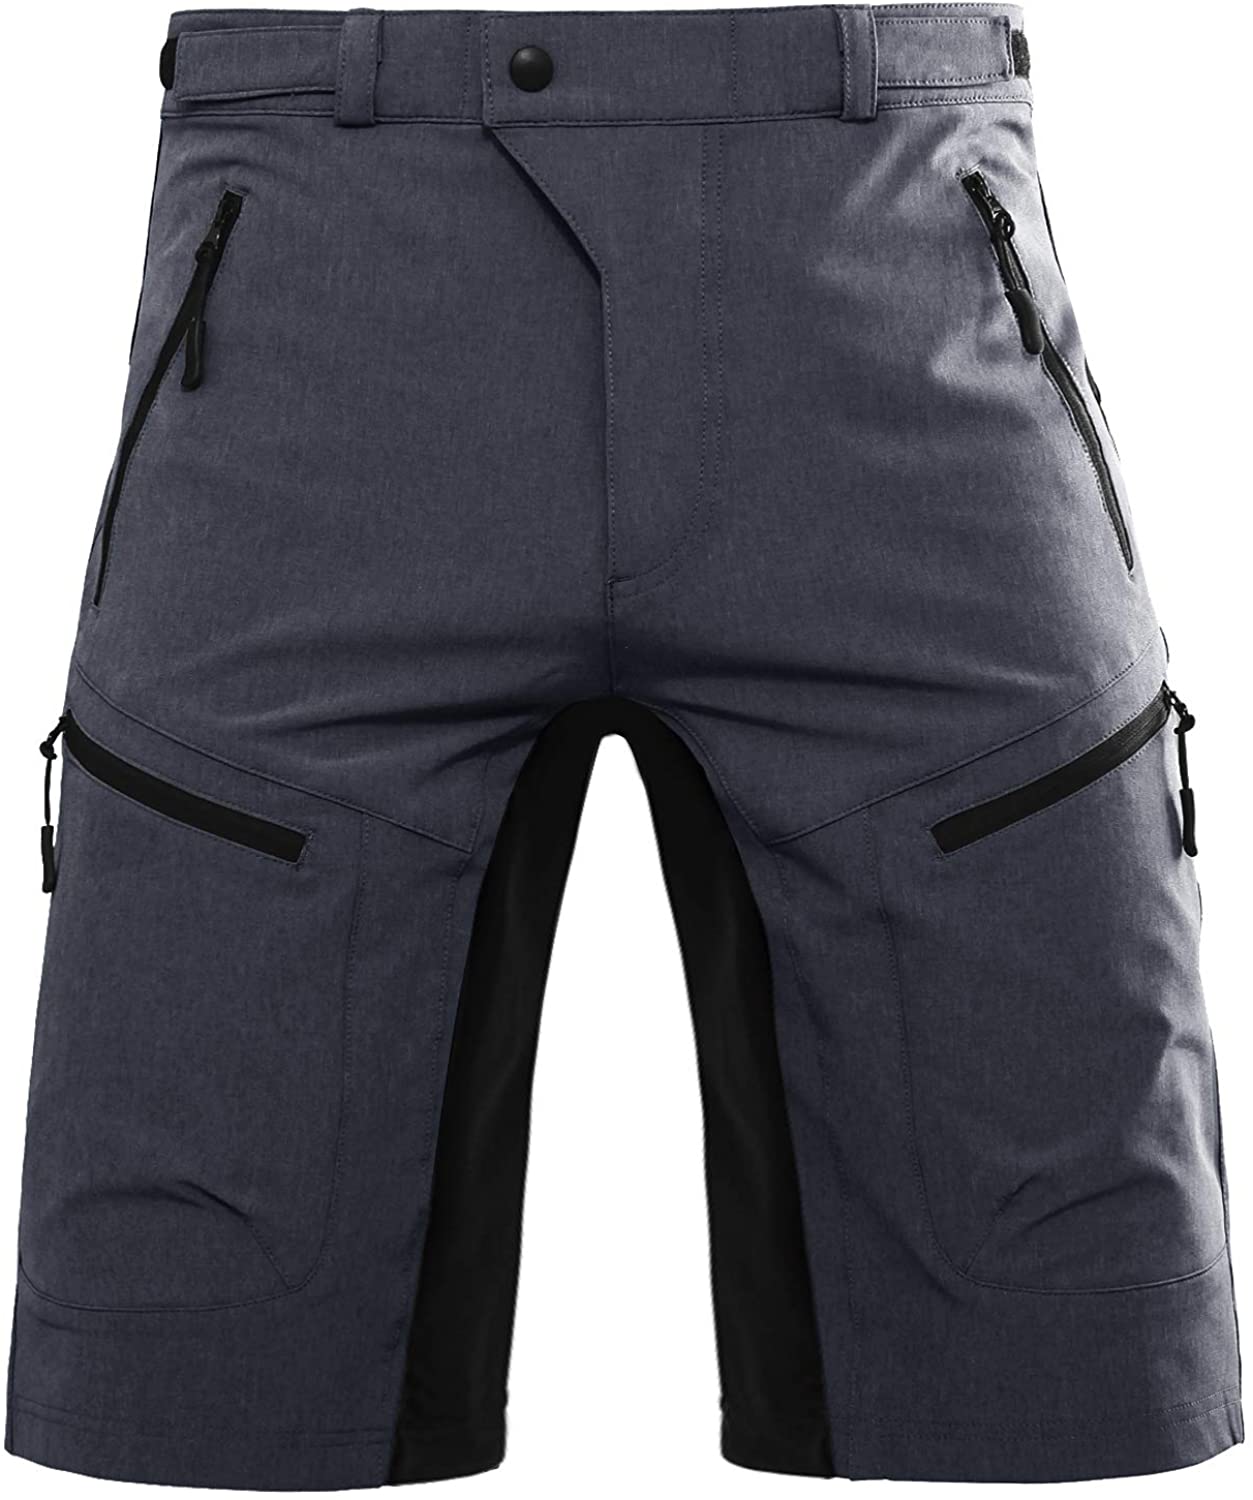 Wespornow Mens-Mountain-Bike-Shorts-MTB-Cycling-Shorts with Zipper Pockets